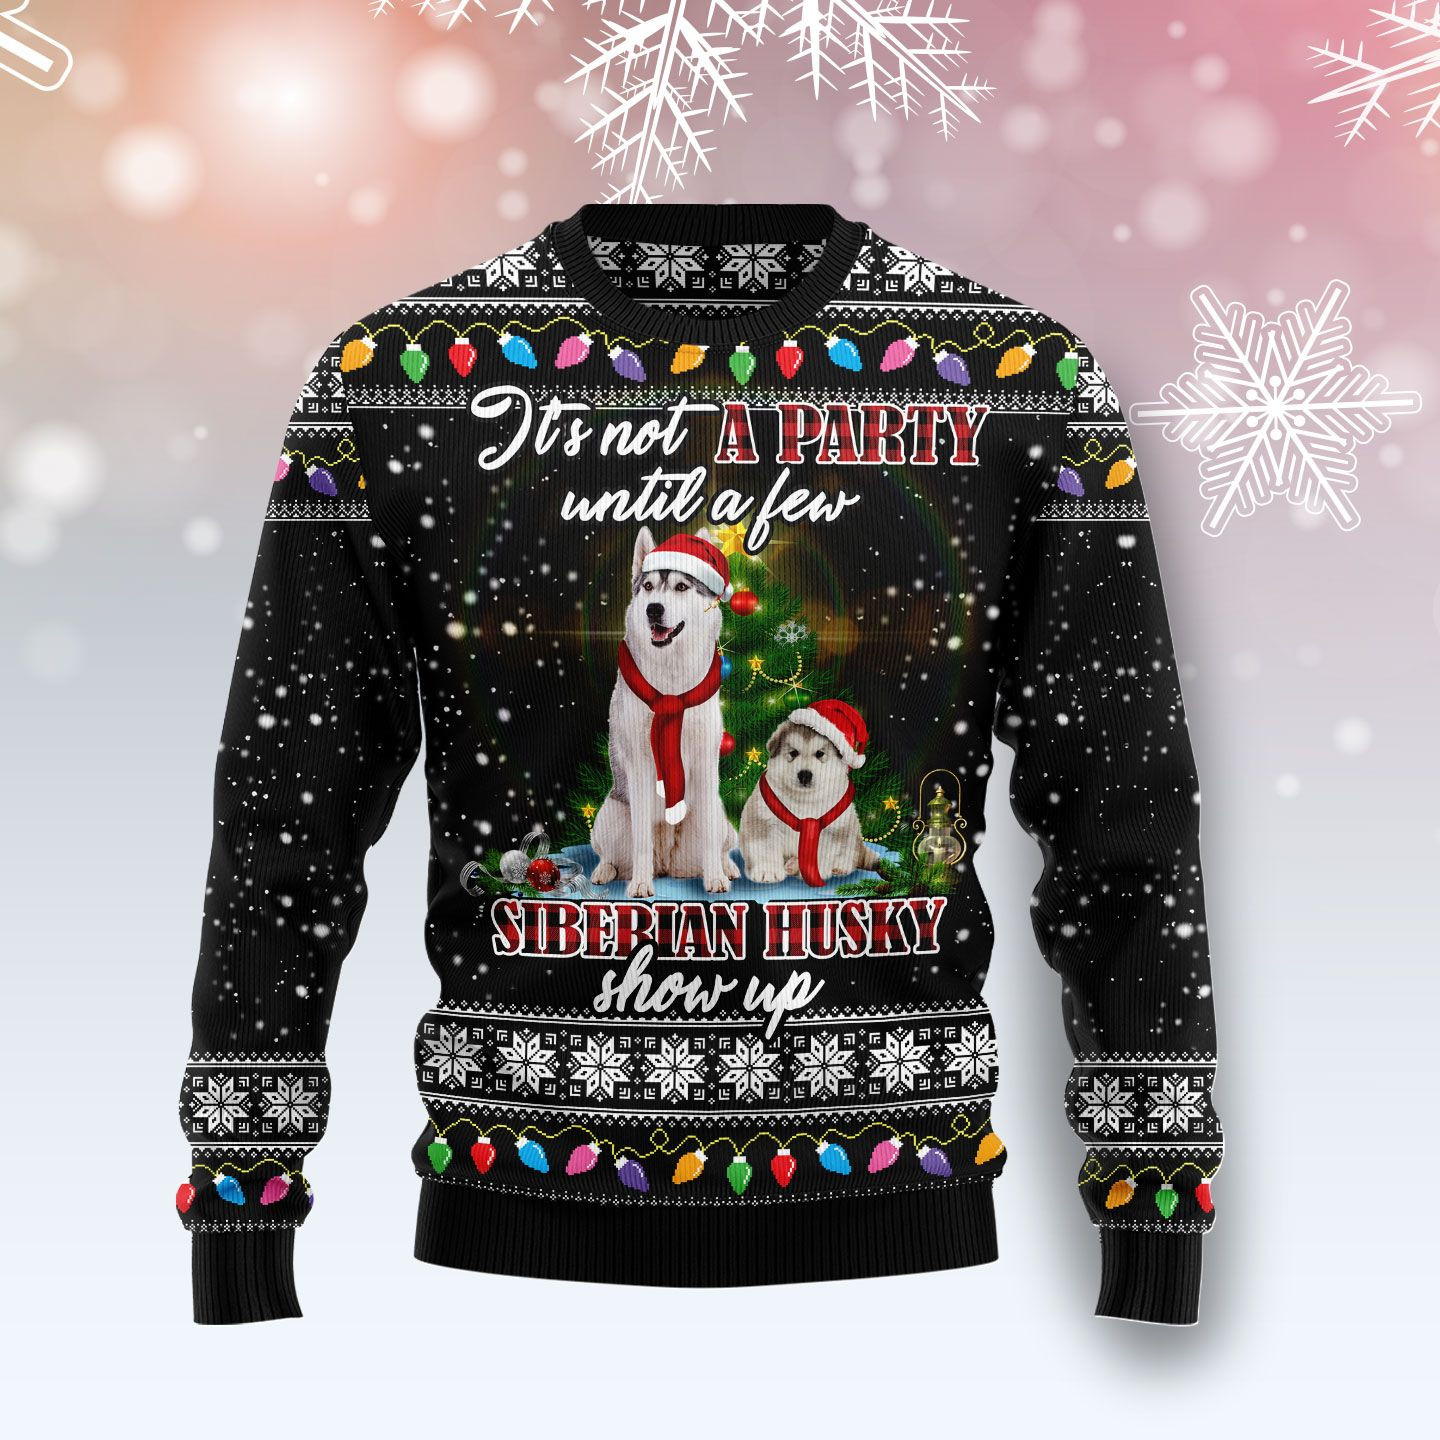 Siberian Husky Show Up Ugly Christmas Sweater